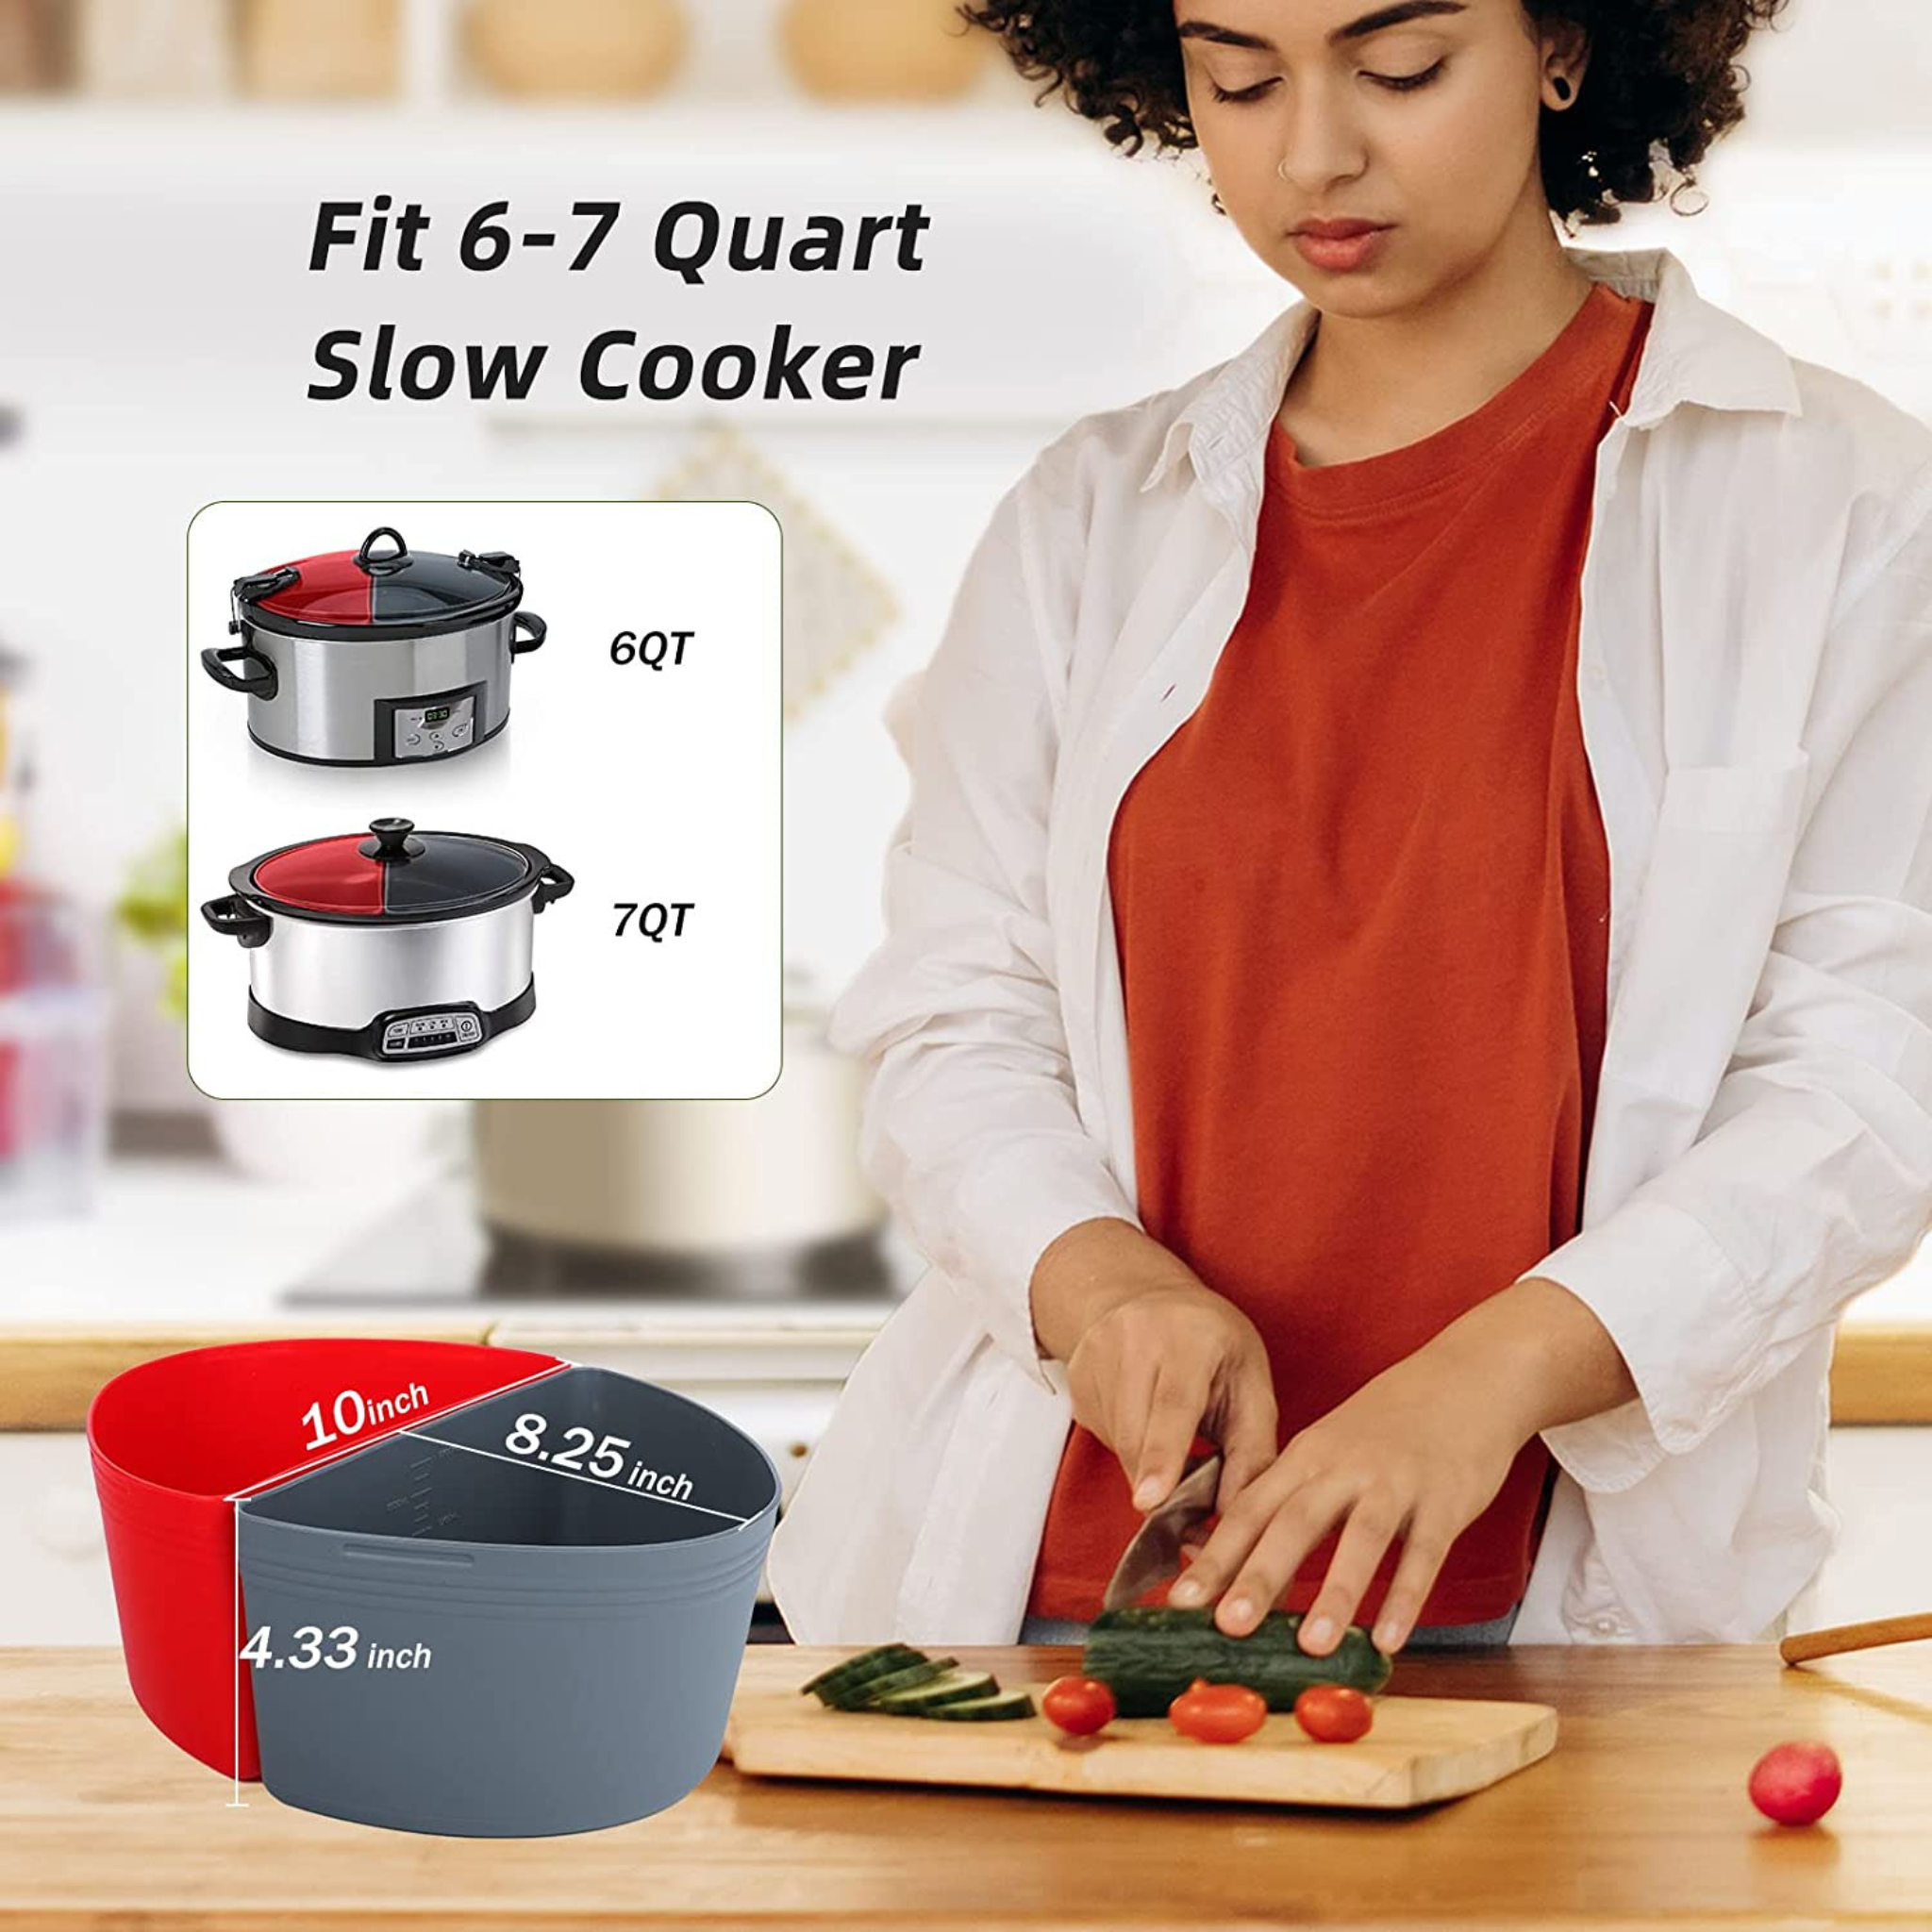 Slow Cooker Liners fit 6-7 Quart Crock Pot liner